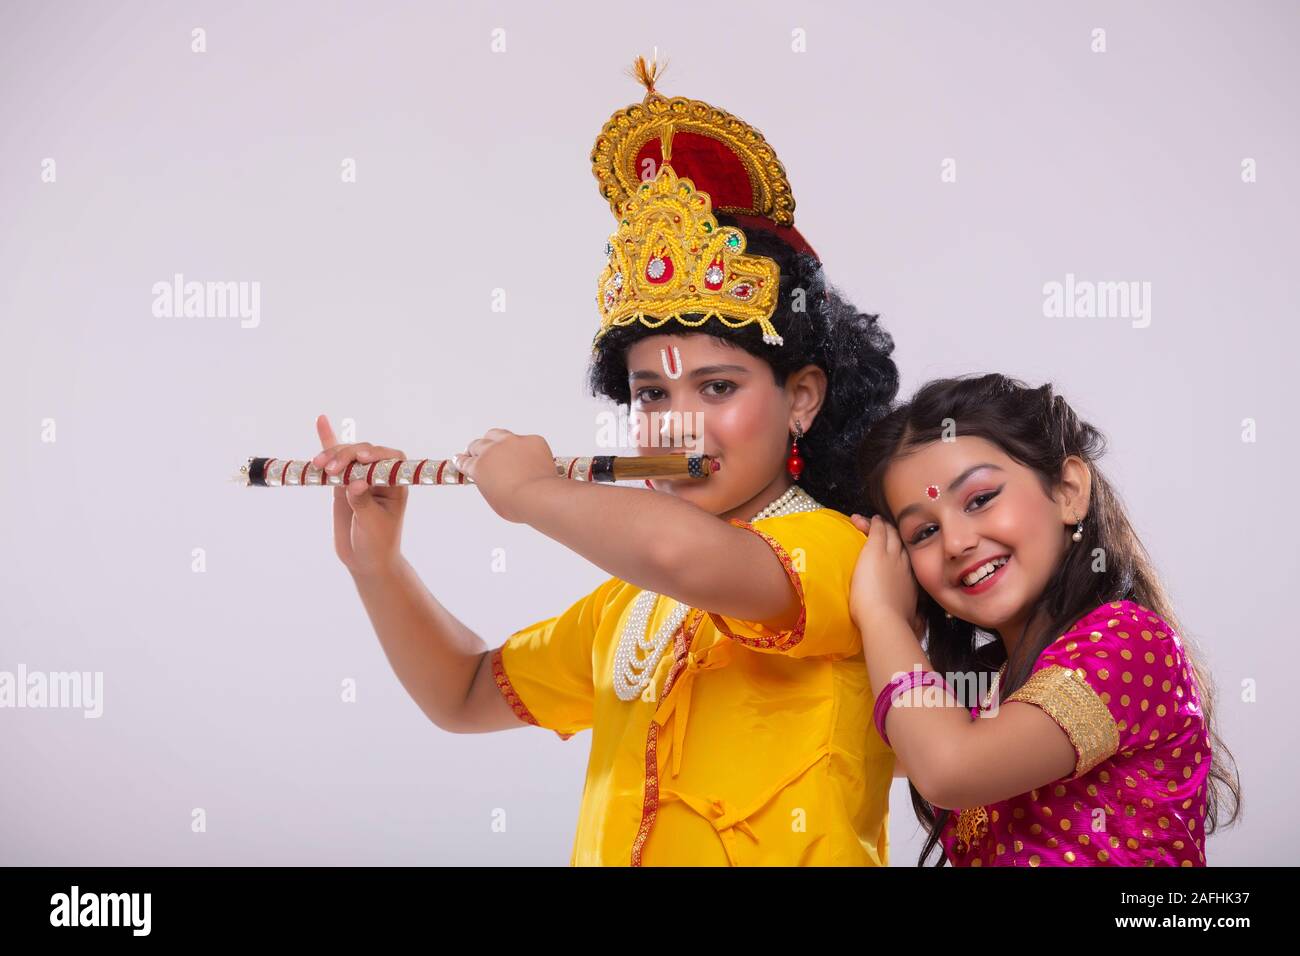 young children dressed as Radha and Krishna Stock Photo